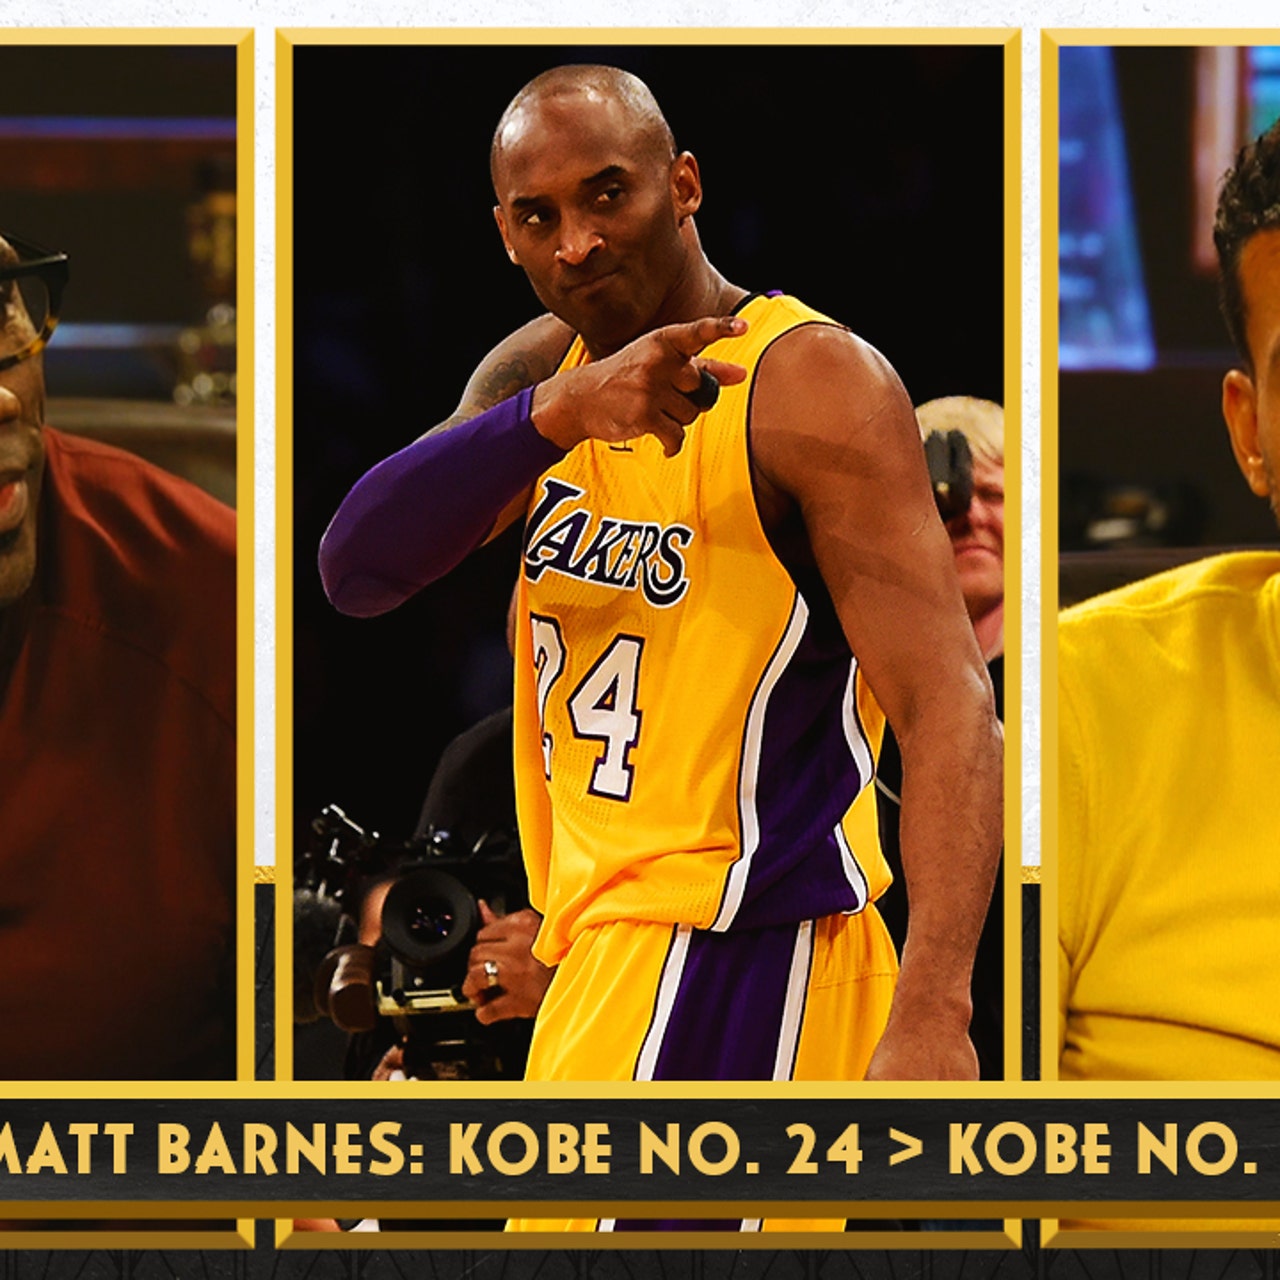 Matt Barnes On Which Kobe Bryant Jersey Was Better: No. 8 Gave Me